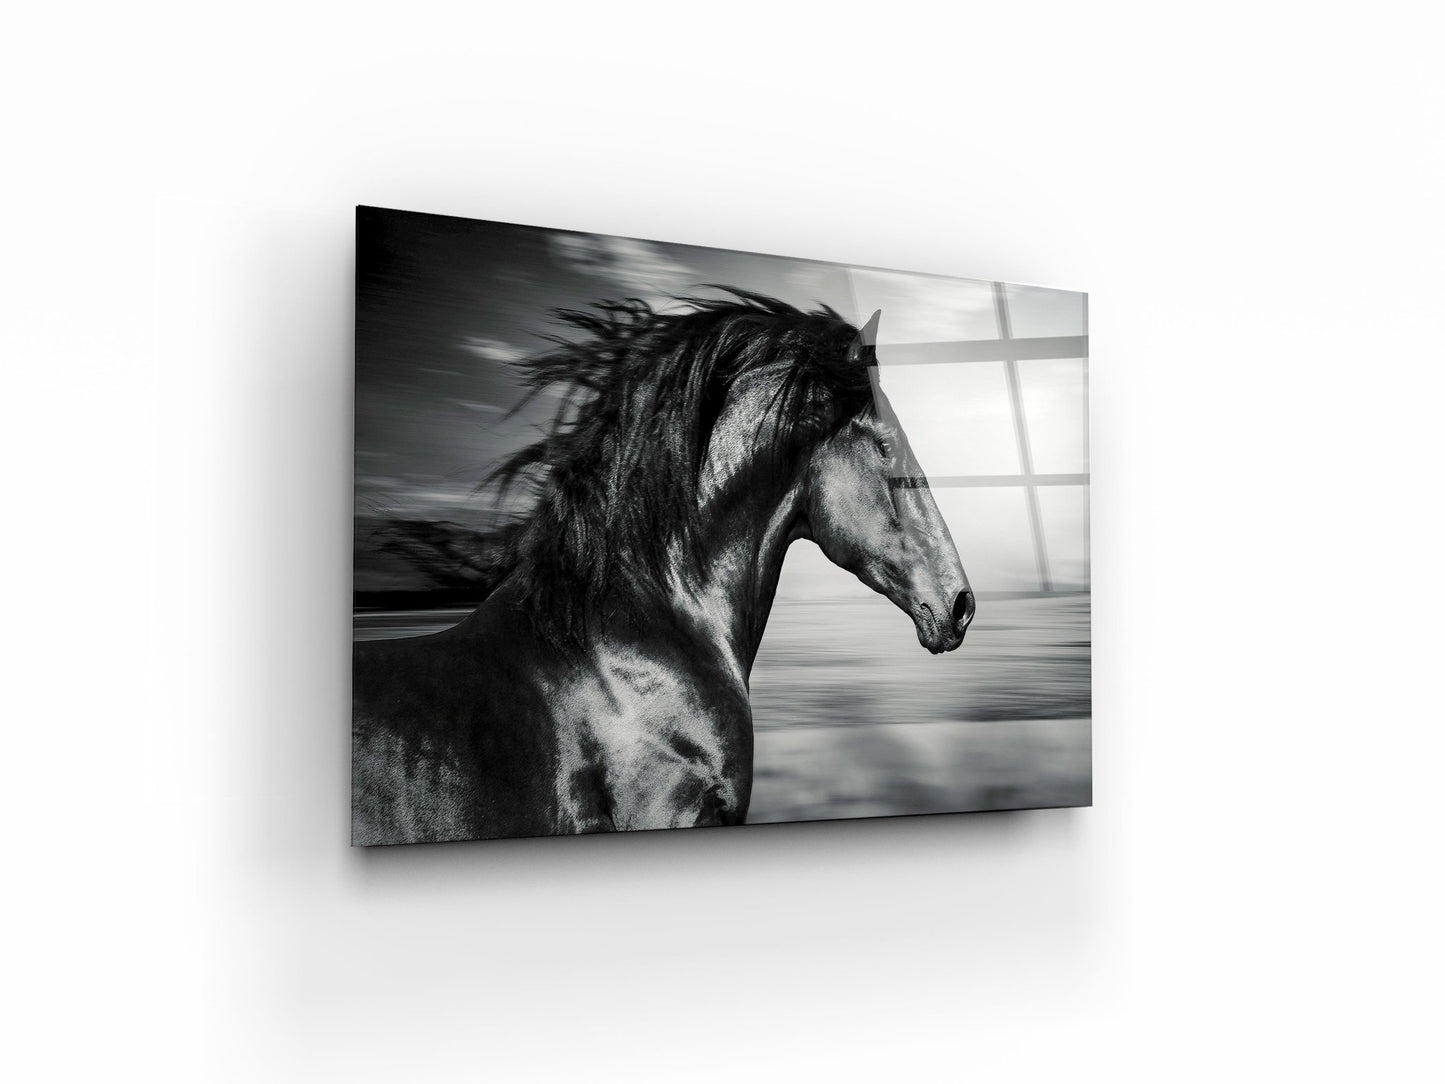 portrait of the Spanish running horse, black and white photo - OCP TINY THINGS